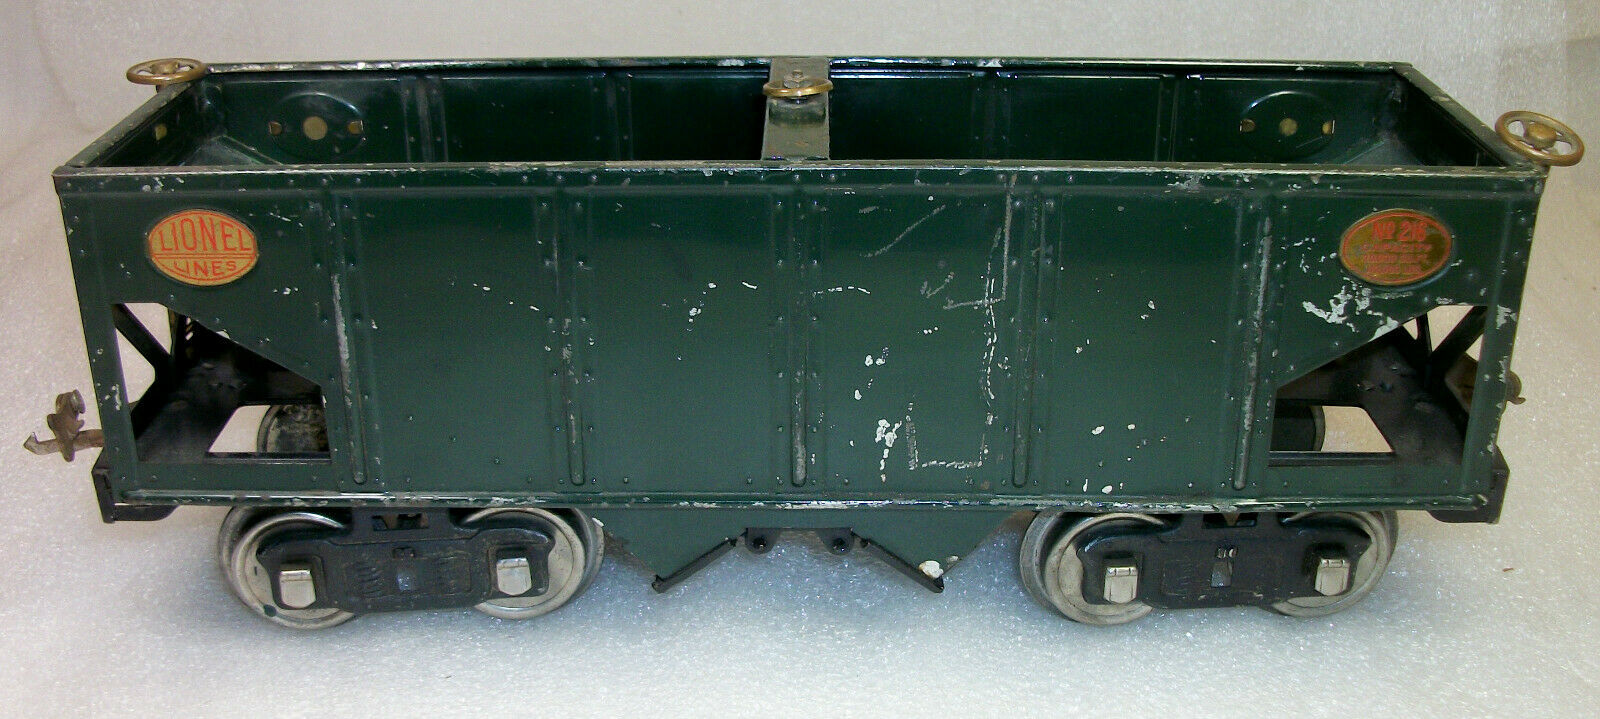 Lionel Prewar Standard Gauge 216 Dark Green Hopper Very Good With Original Paint